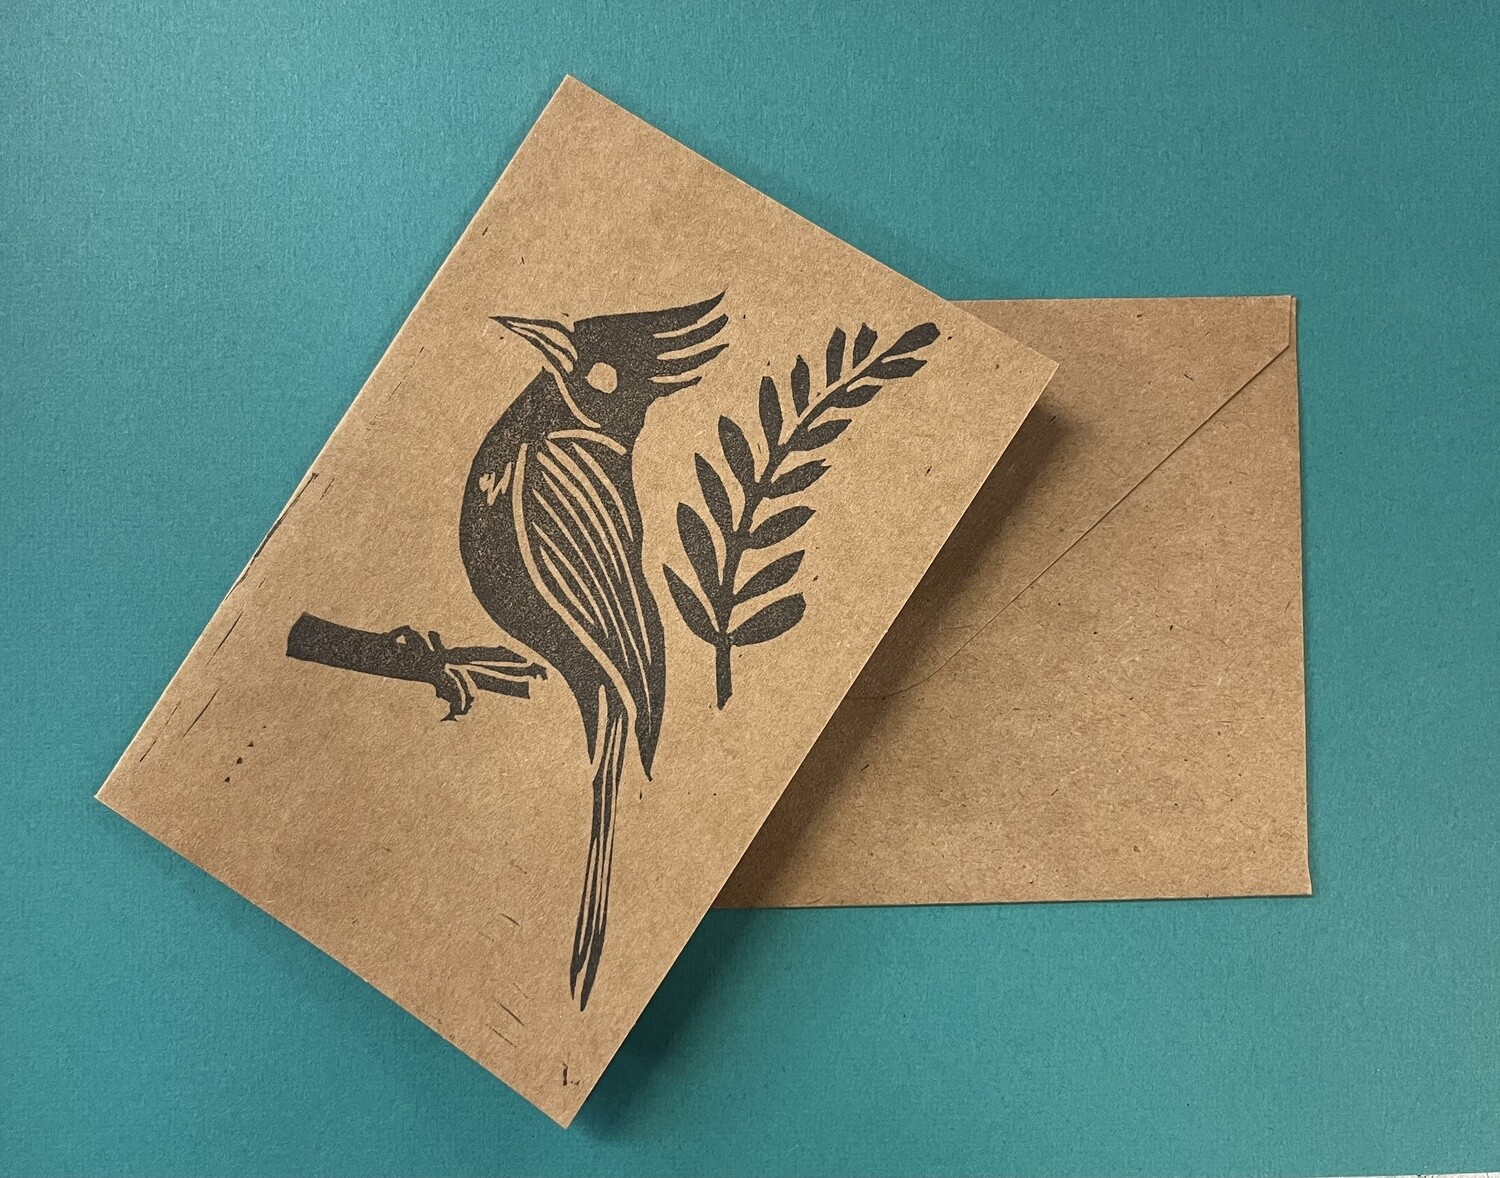 Stellar Jay & Pine - Holly-Daze Greeting Card by Kaiju Cabal